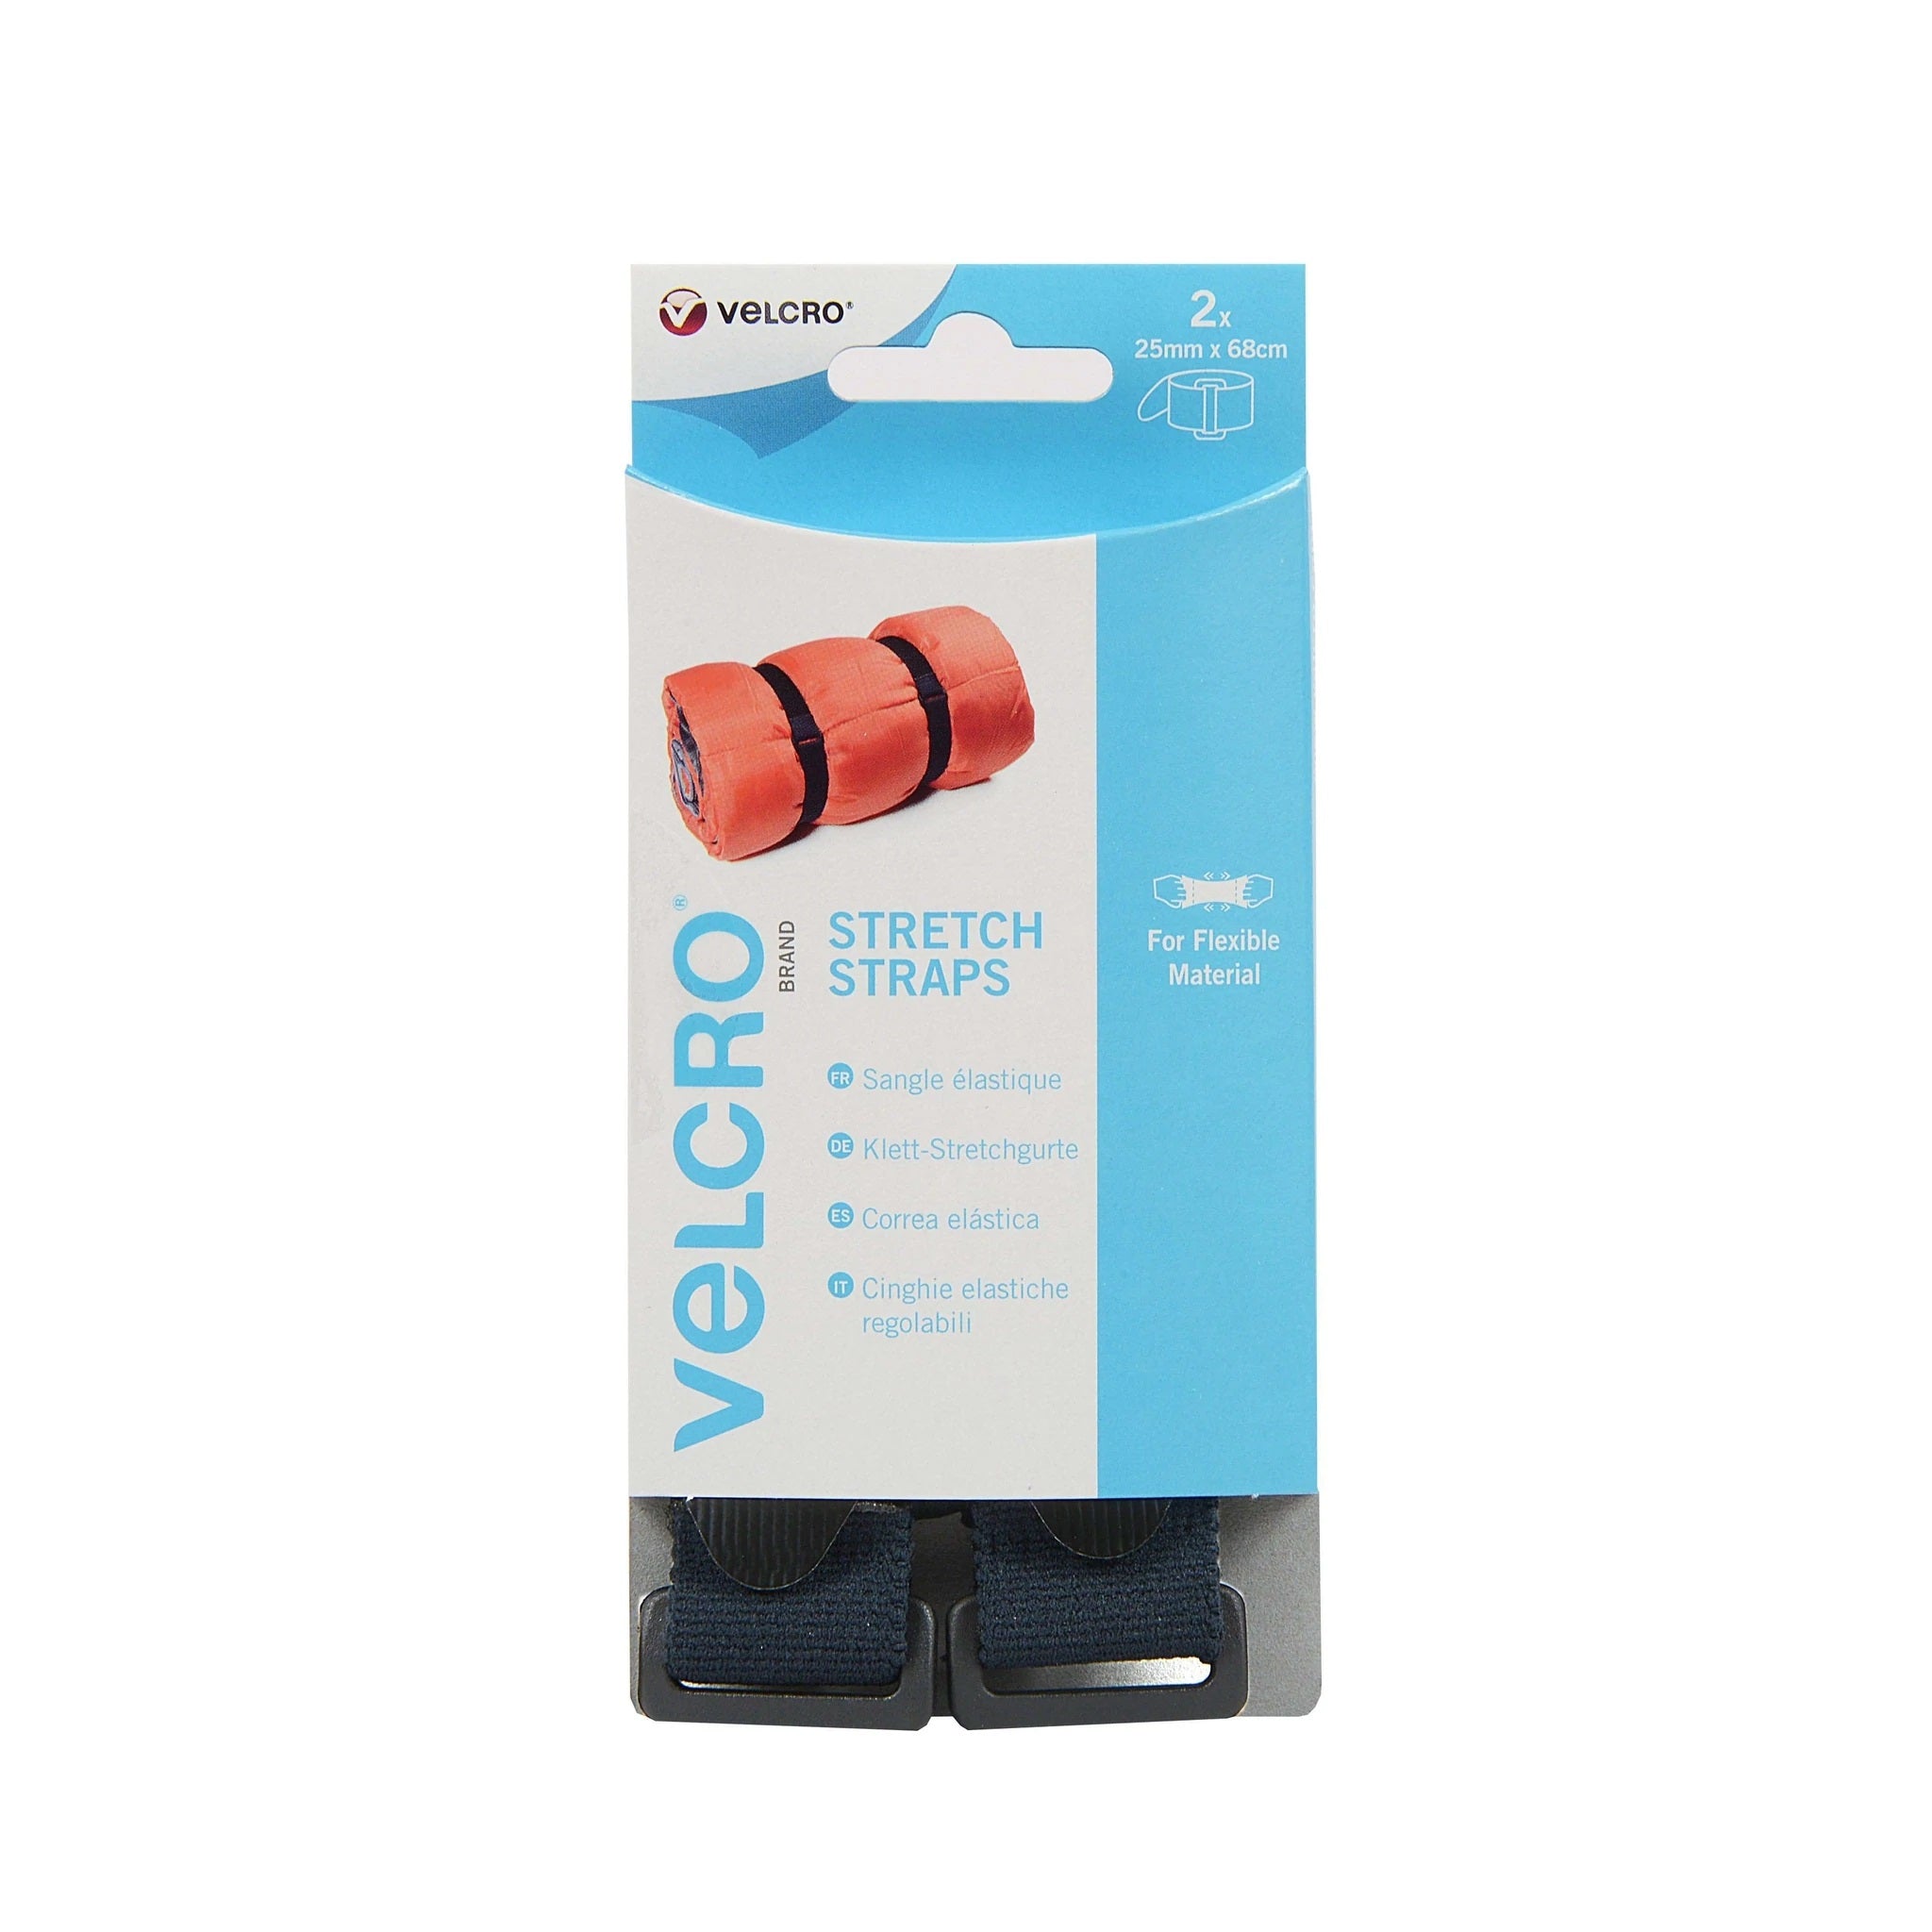 VELCRO® Brand Black Stretch Strap 25mm x 68cm - Pack of 1